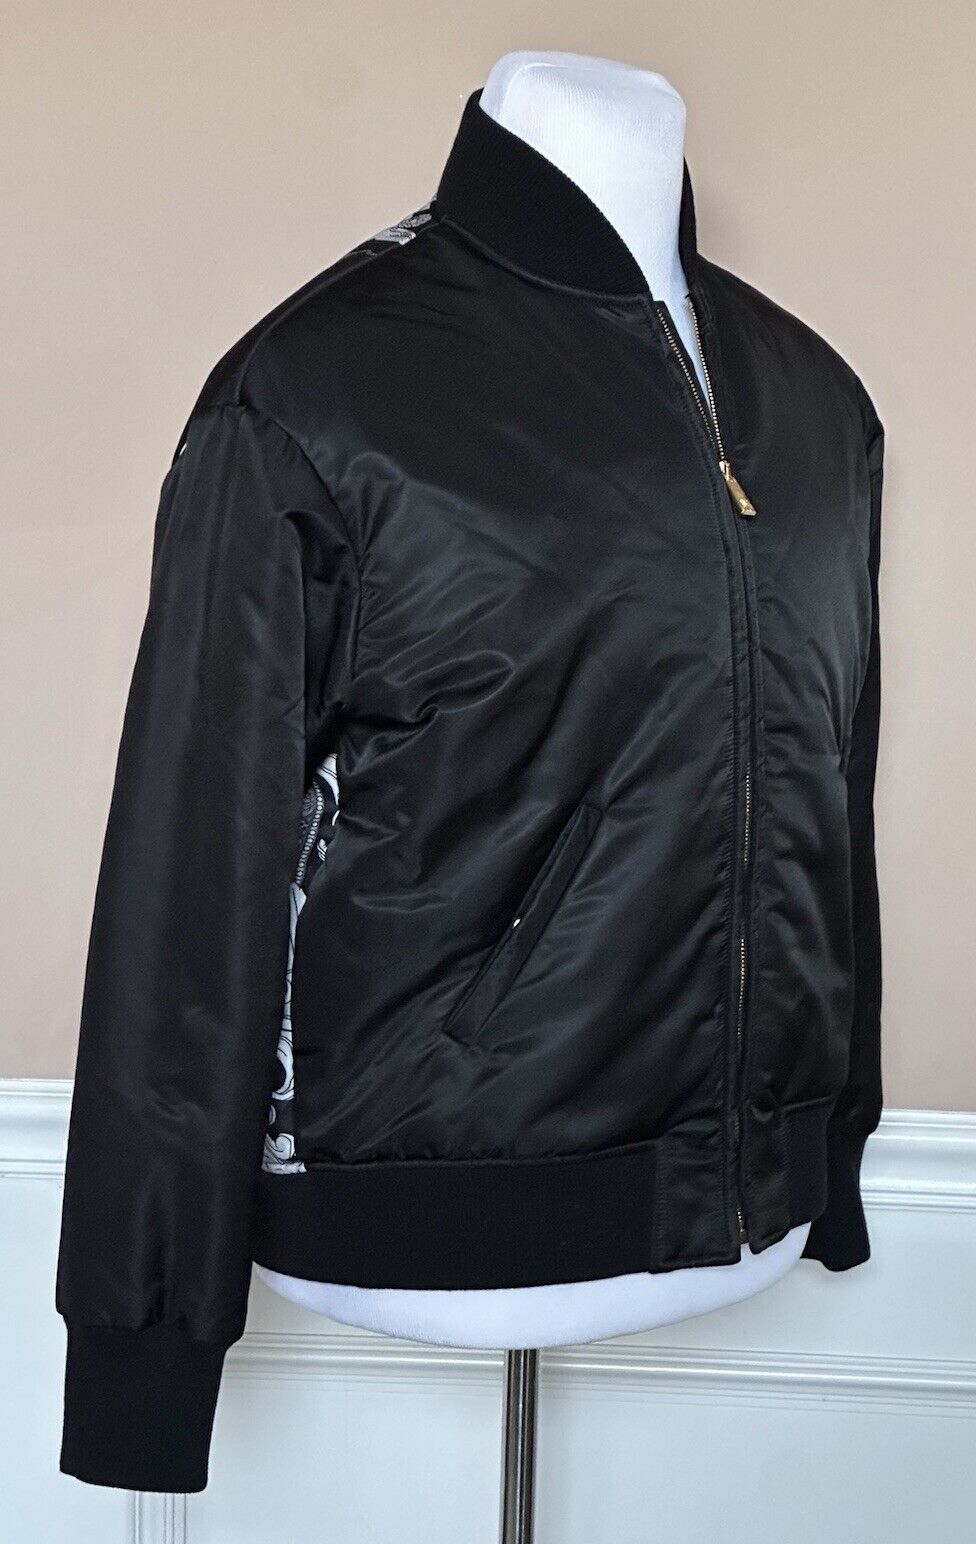 NWT $1990 Versace Medusa Print Women's Blouson Nylon Jacket Black 6 US (40 Euro)